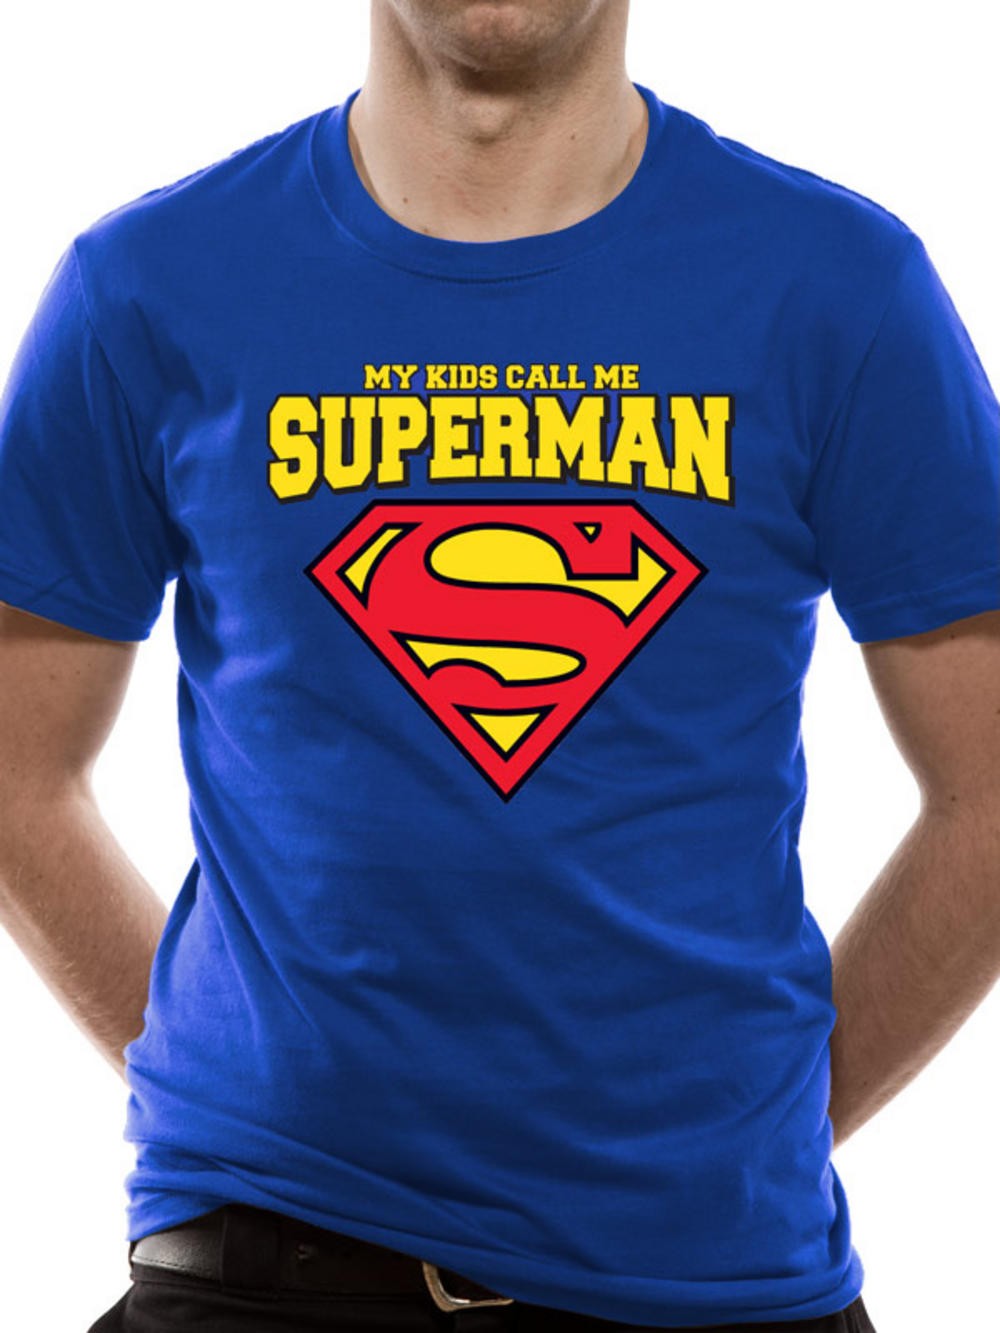 SUPERMAN "My Kids Call Me" Official Men's T-Shirt (S)